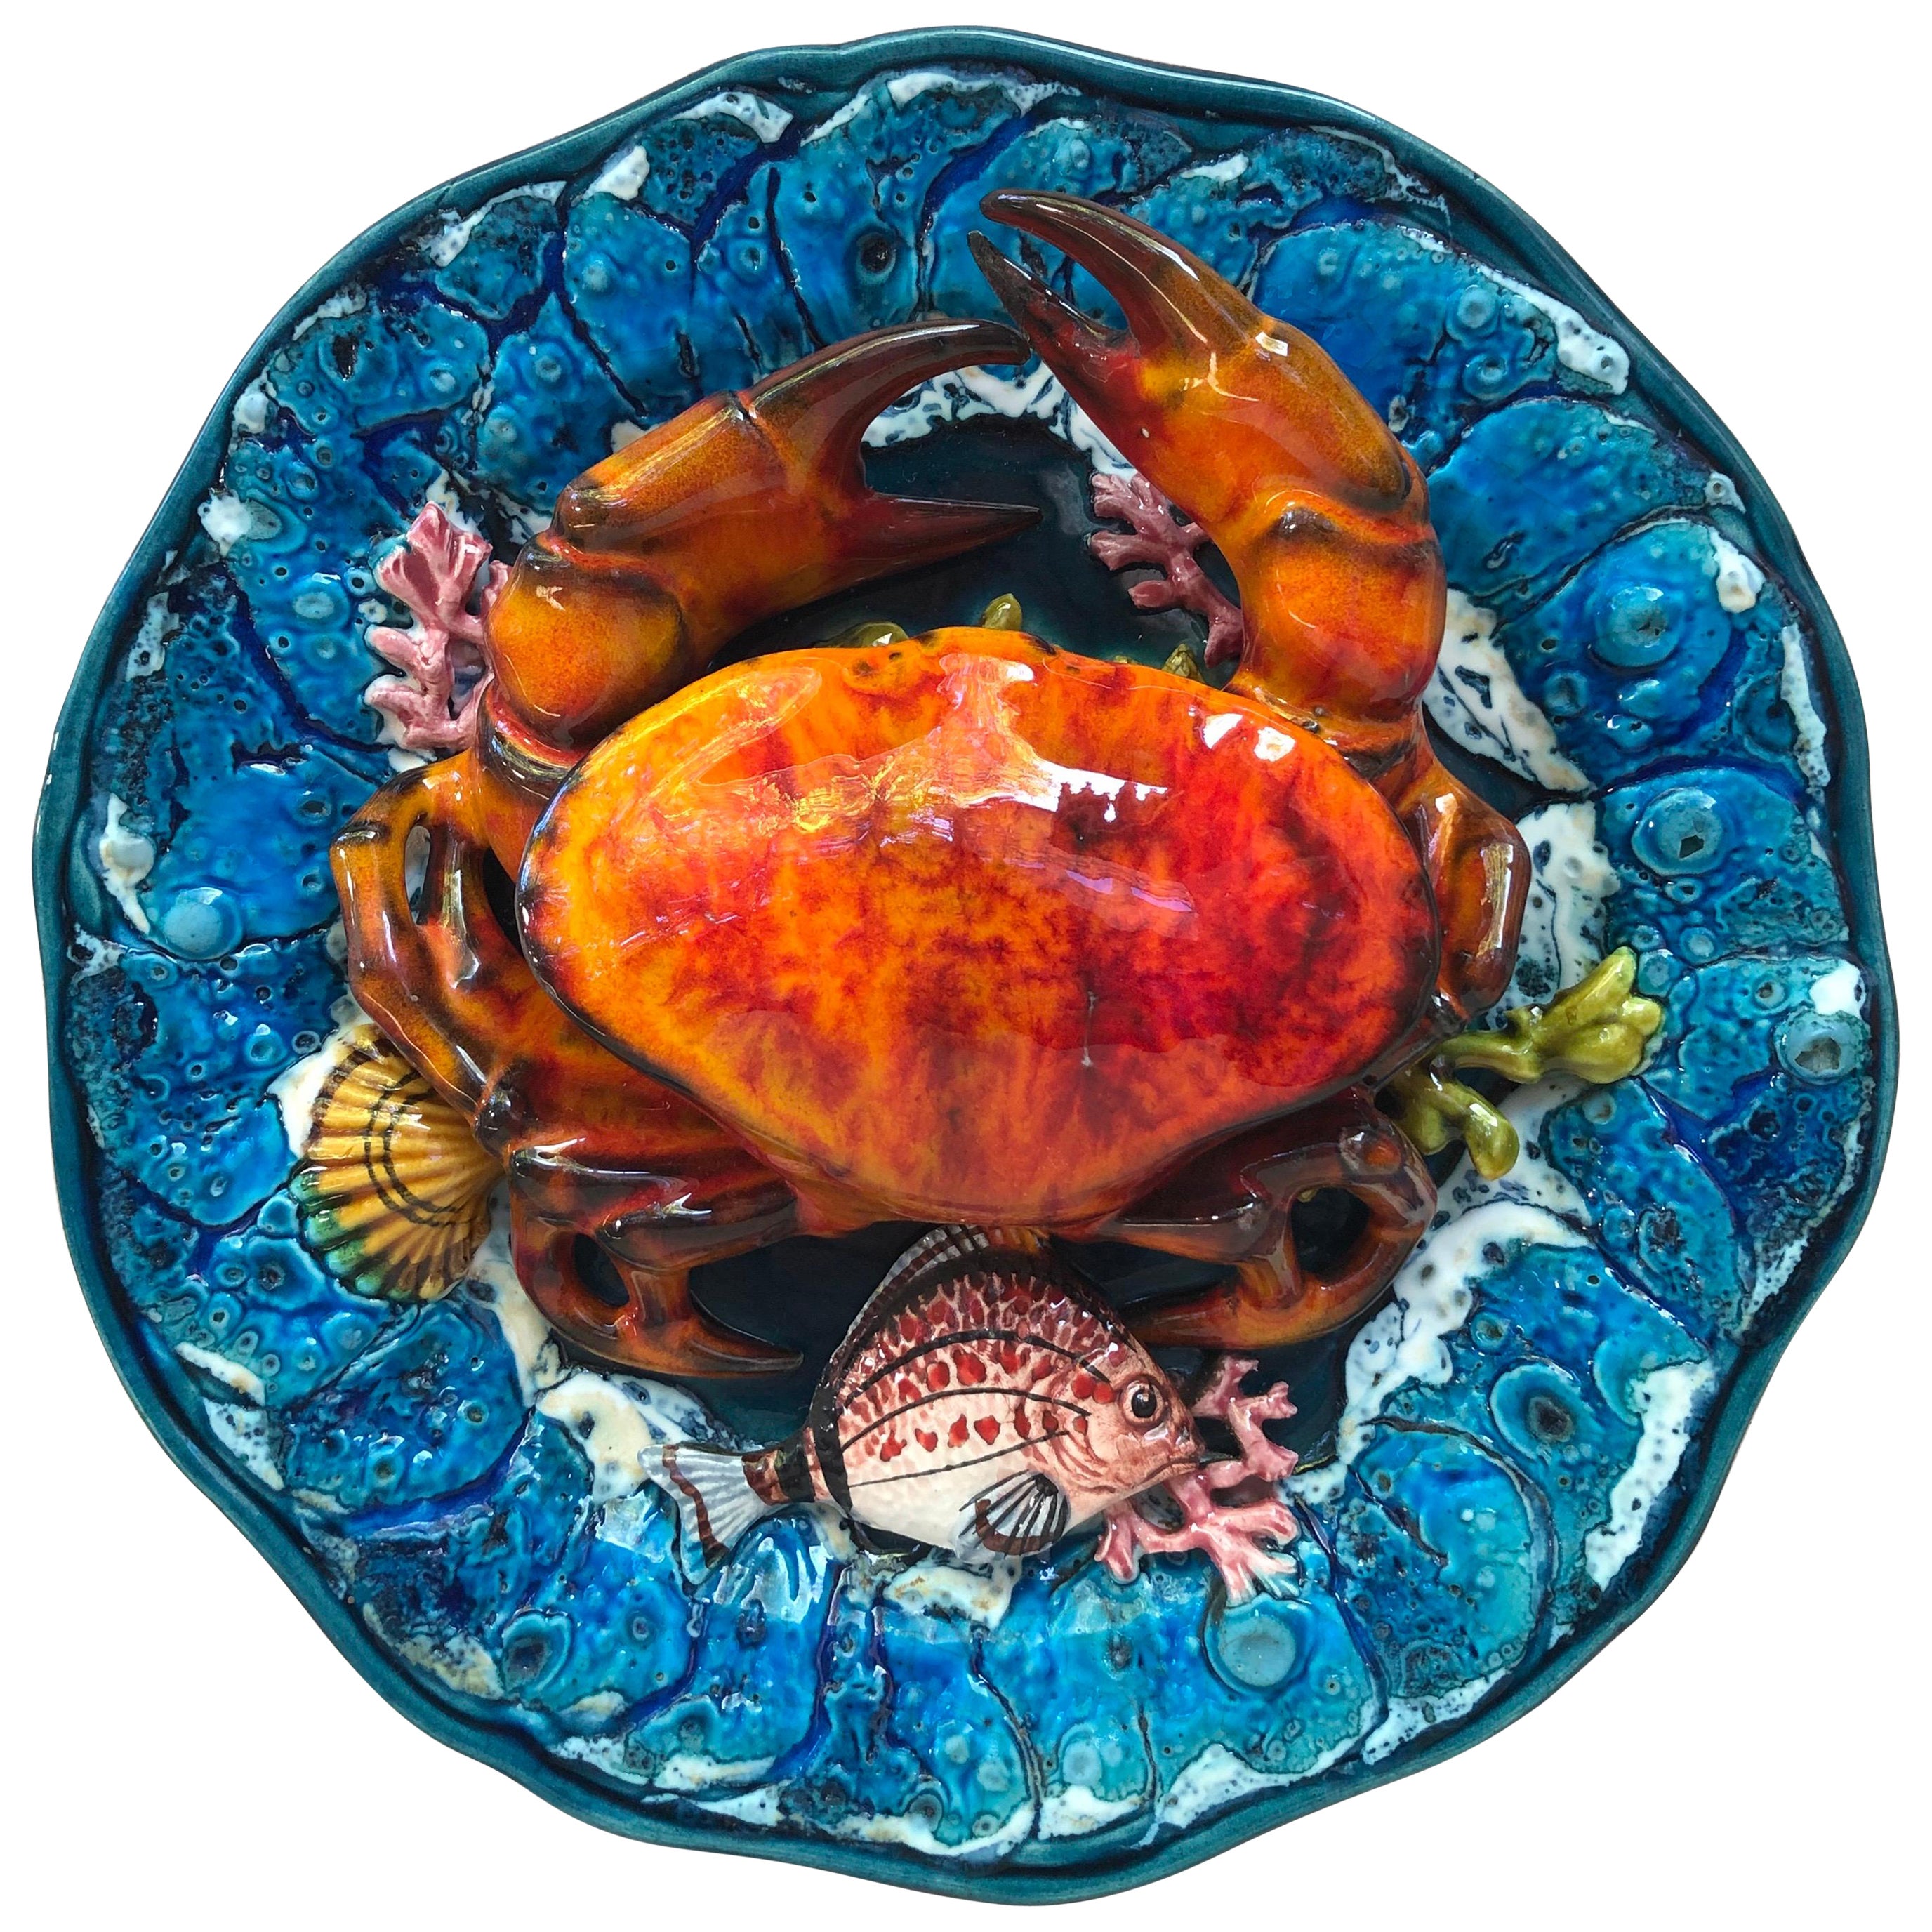 Grand plat mural en majolique de Vallauris en forme de crabe, vers 1950